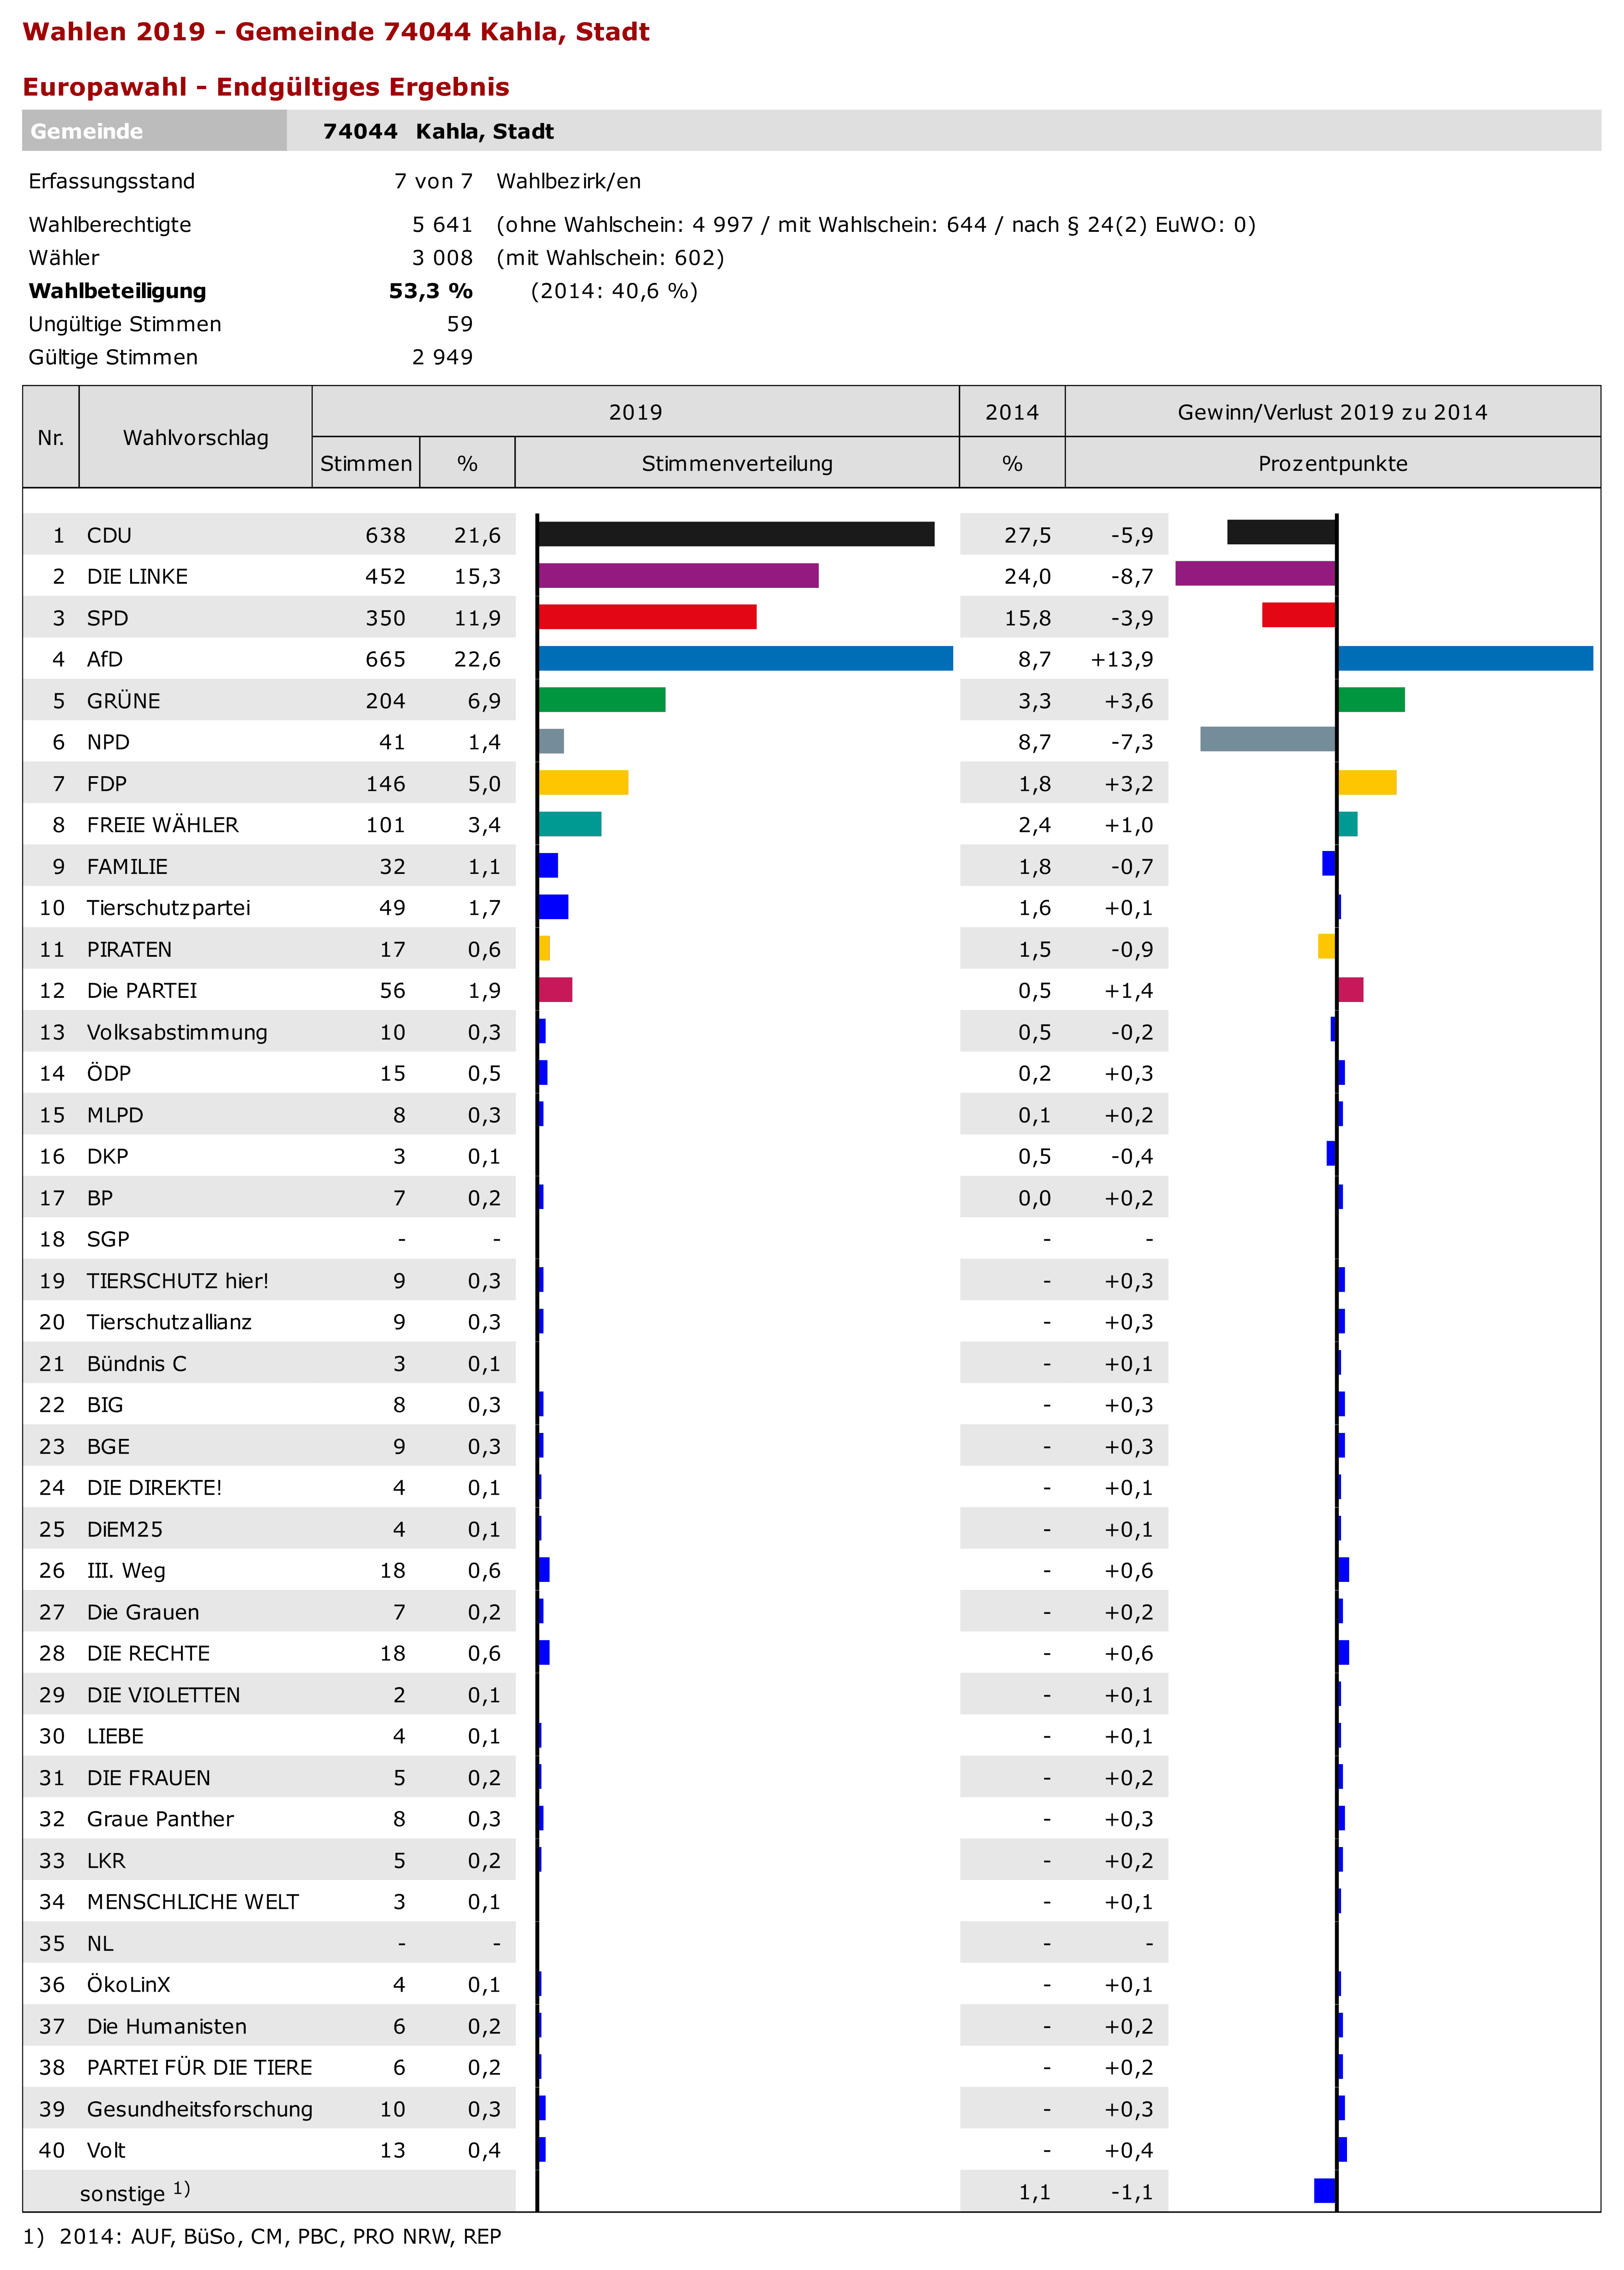 Ergebnis Europawahl Stadt Kahla.png